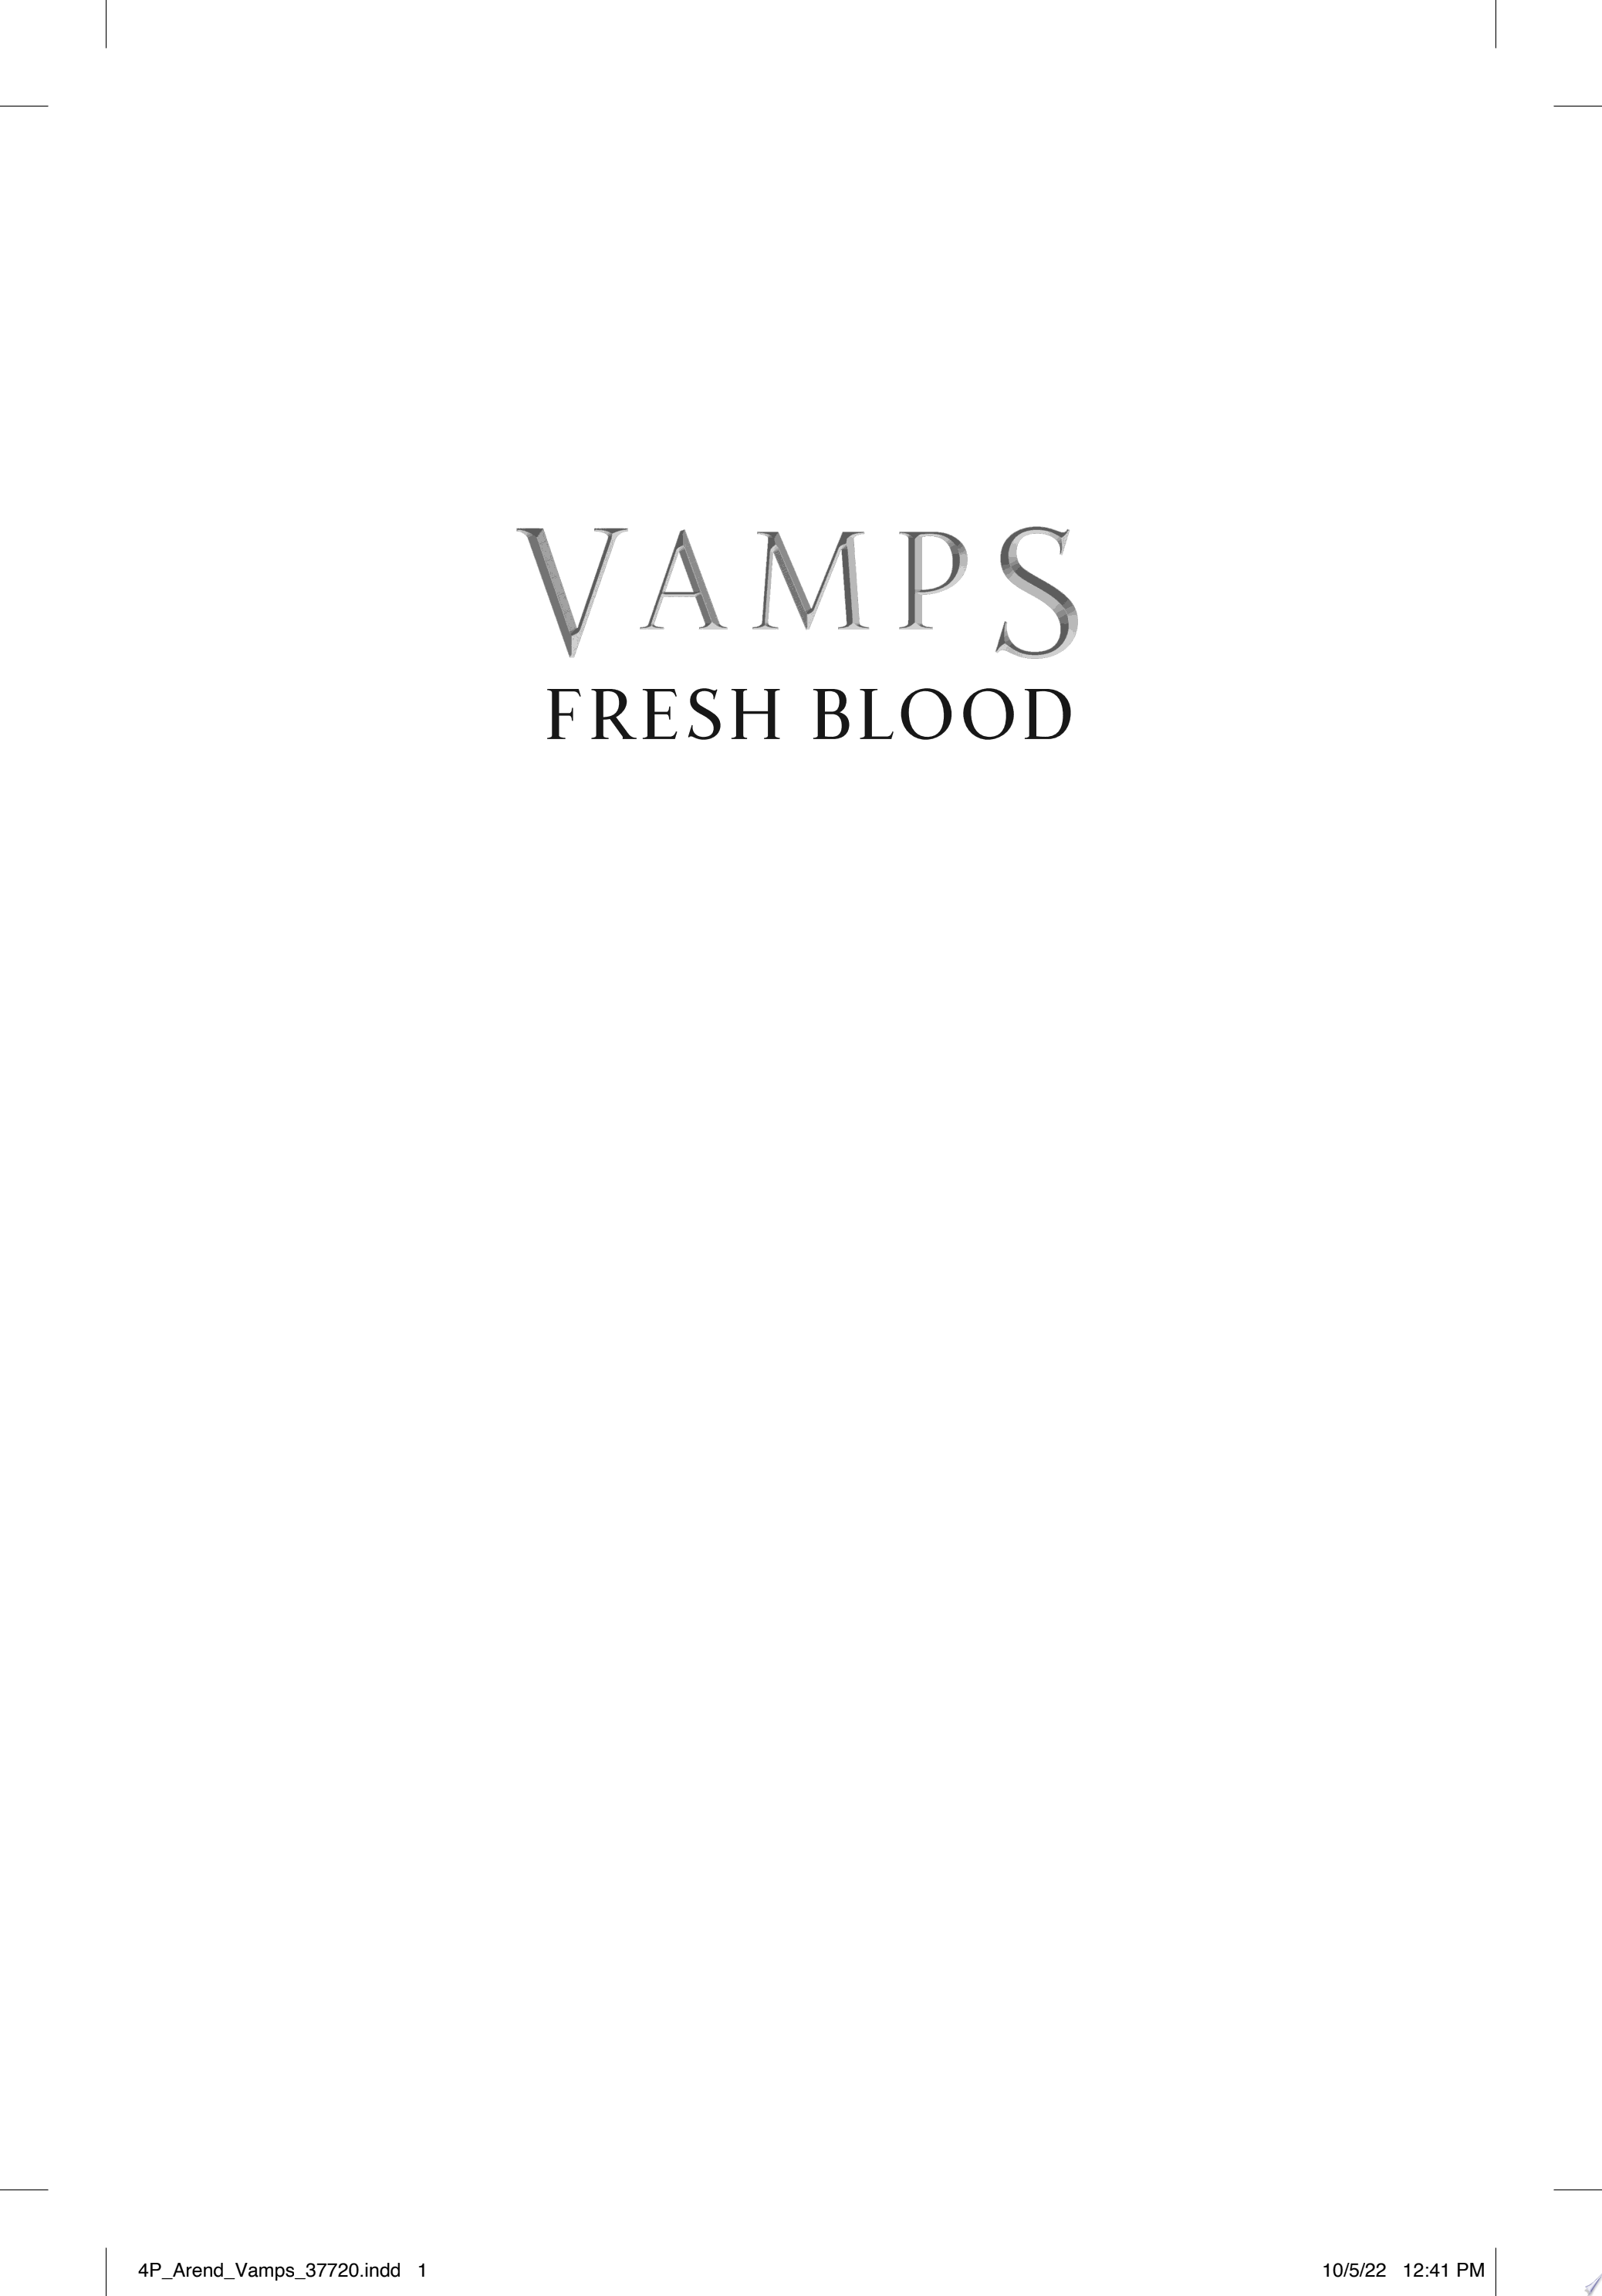 Image for "VAMPS: Fresh Blood"